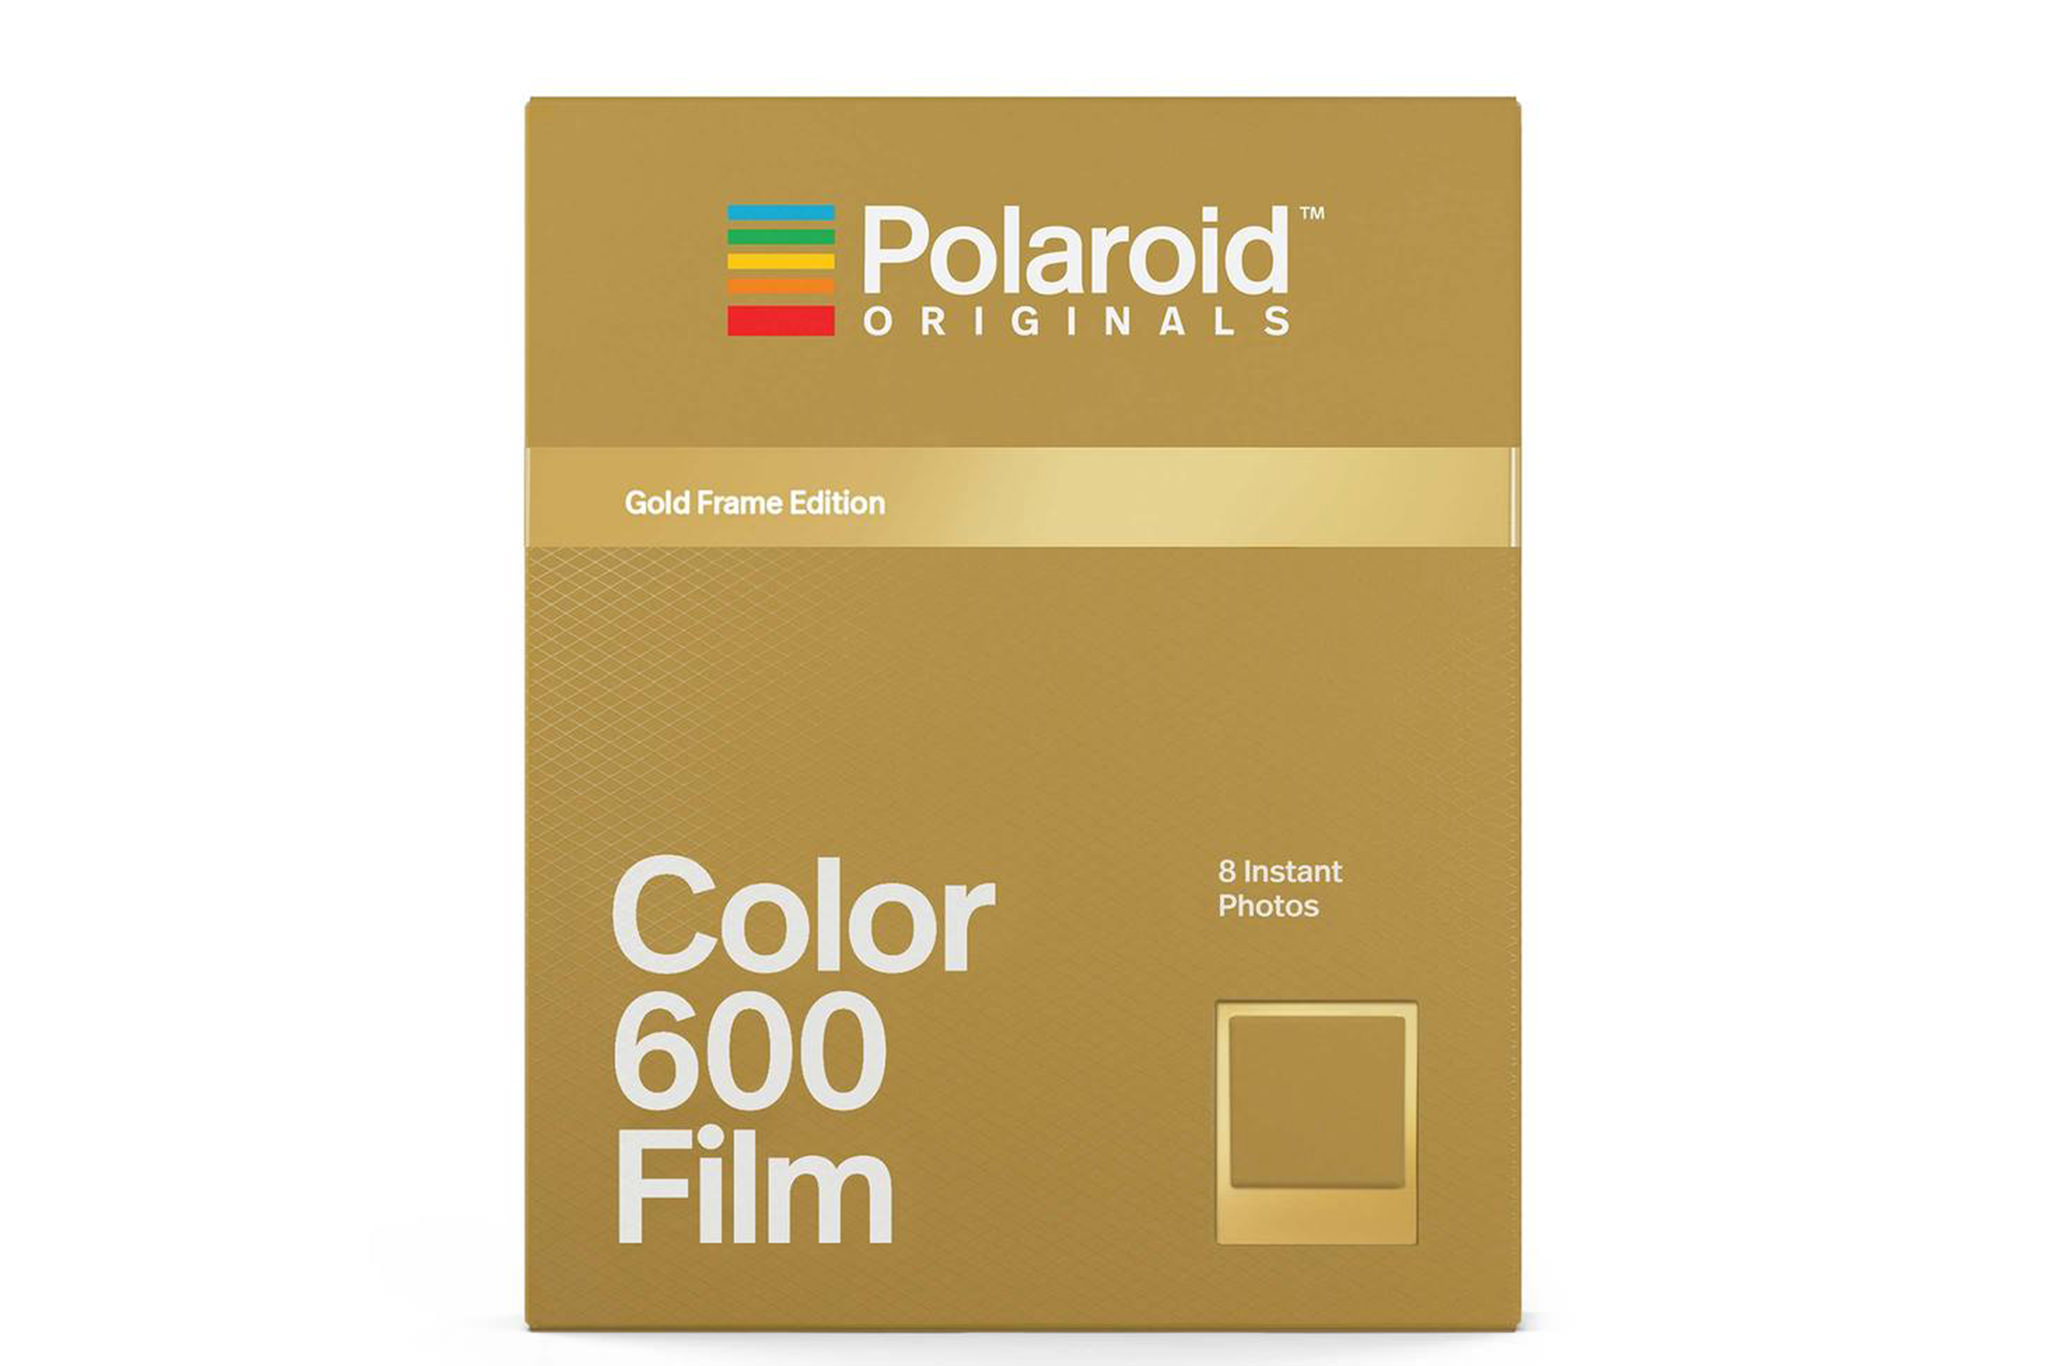 polaroid-originals-color-instant-film-for-600-gold-frame-edition